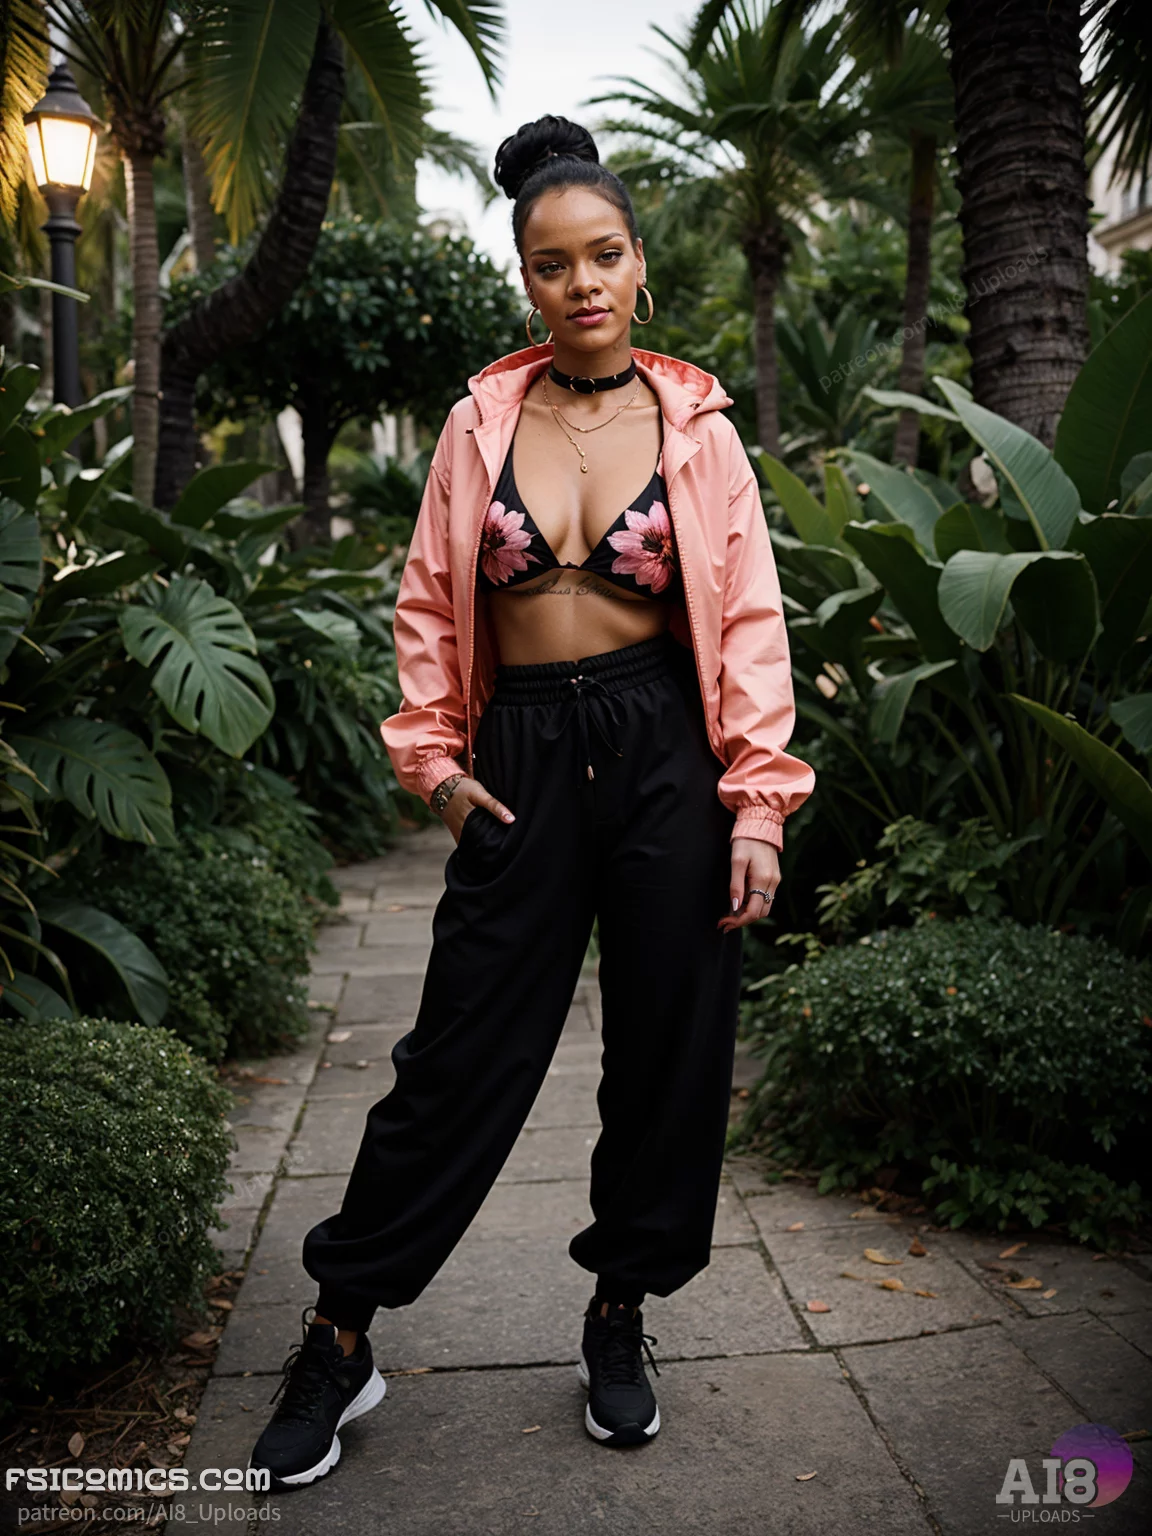 Rihanna - Tropical Island - AI8 Uploads - 3 - FSIComics